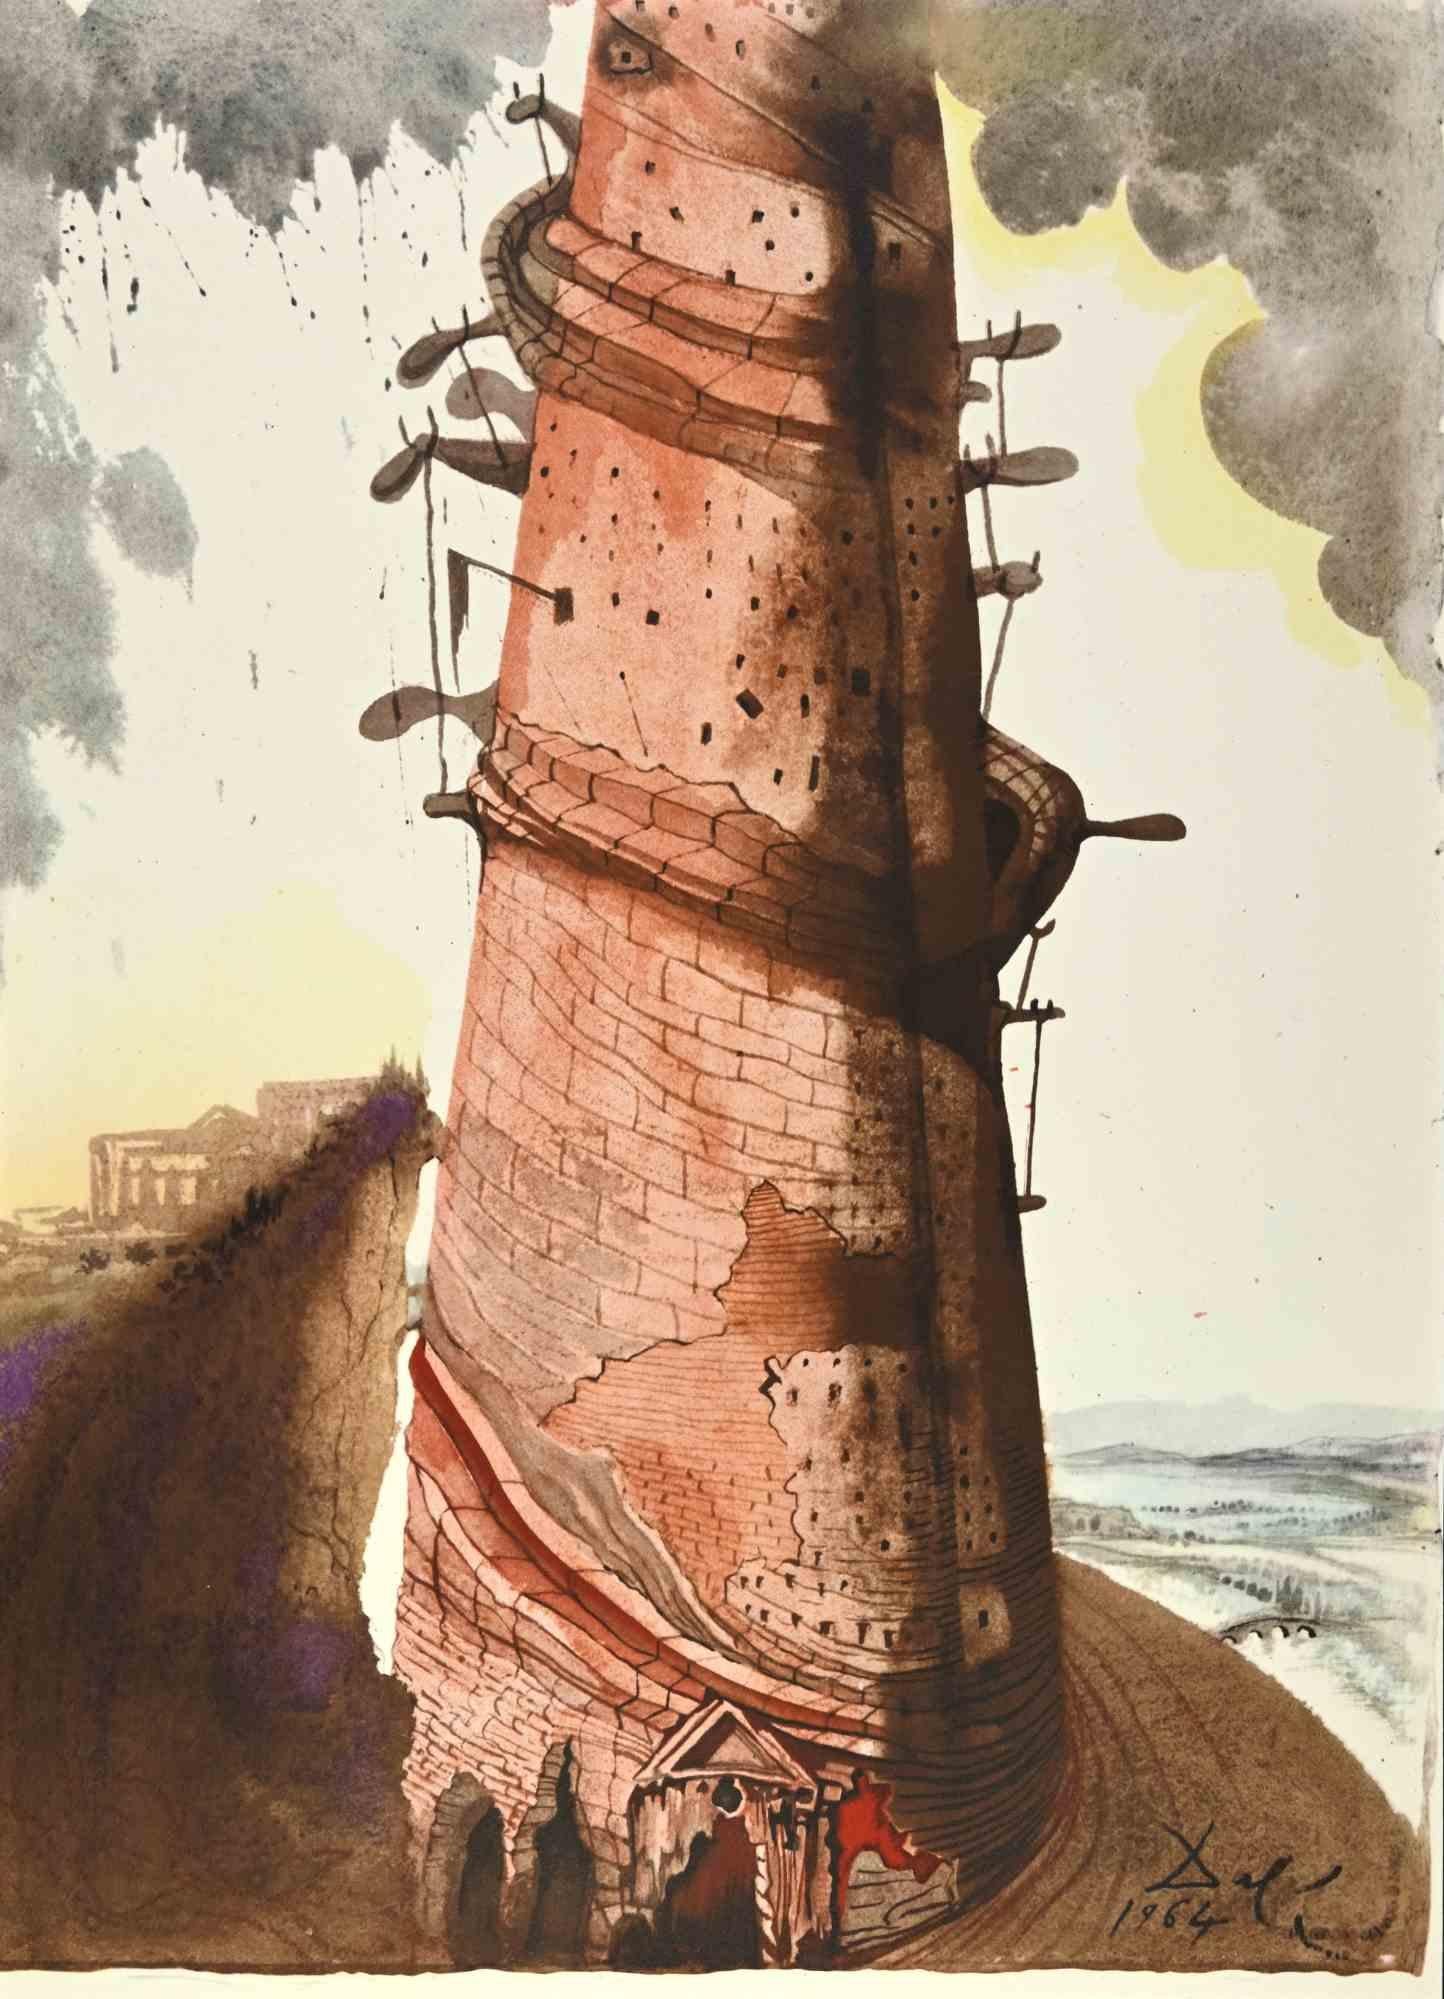 Salvador Dalí Print - Turris Babel - Lithograph  - 1964